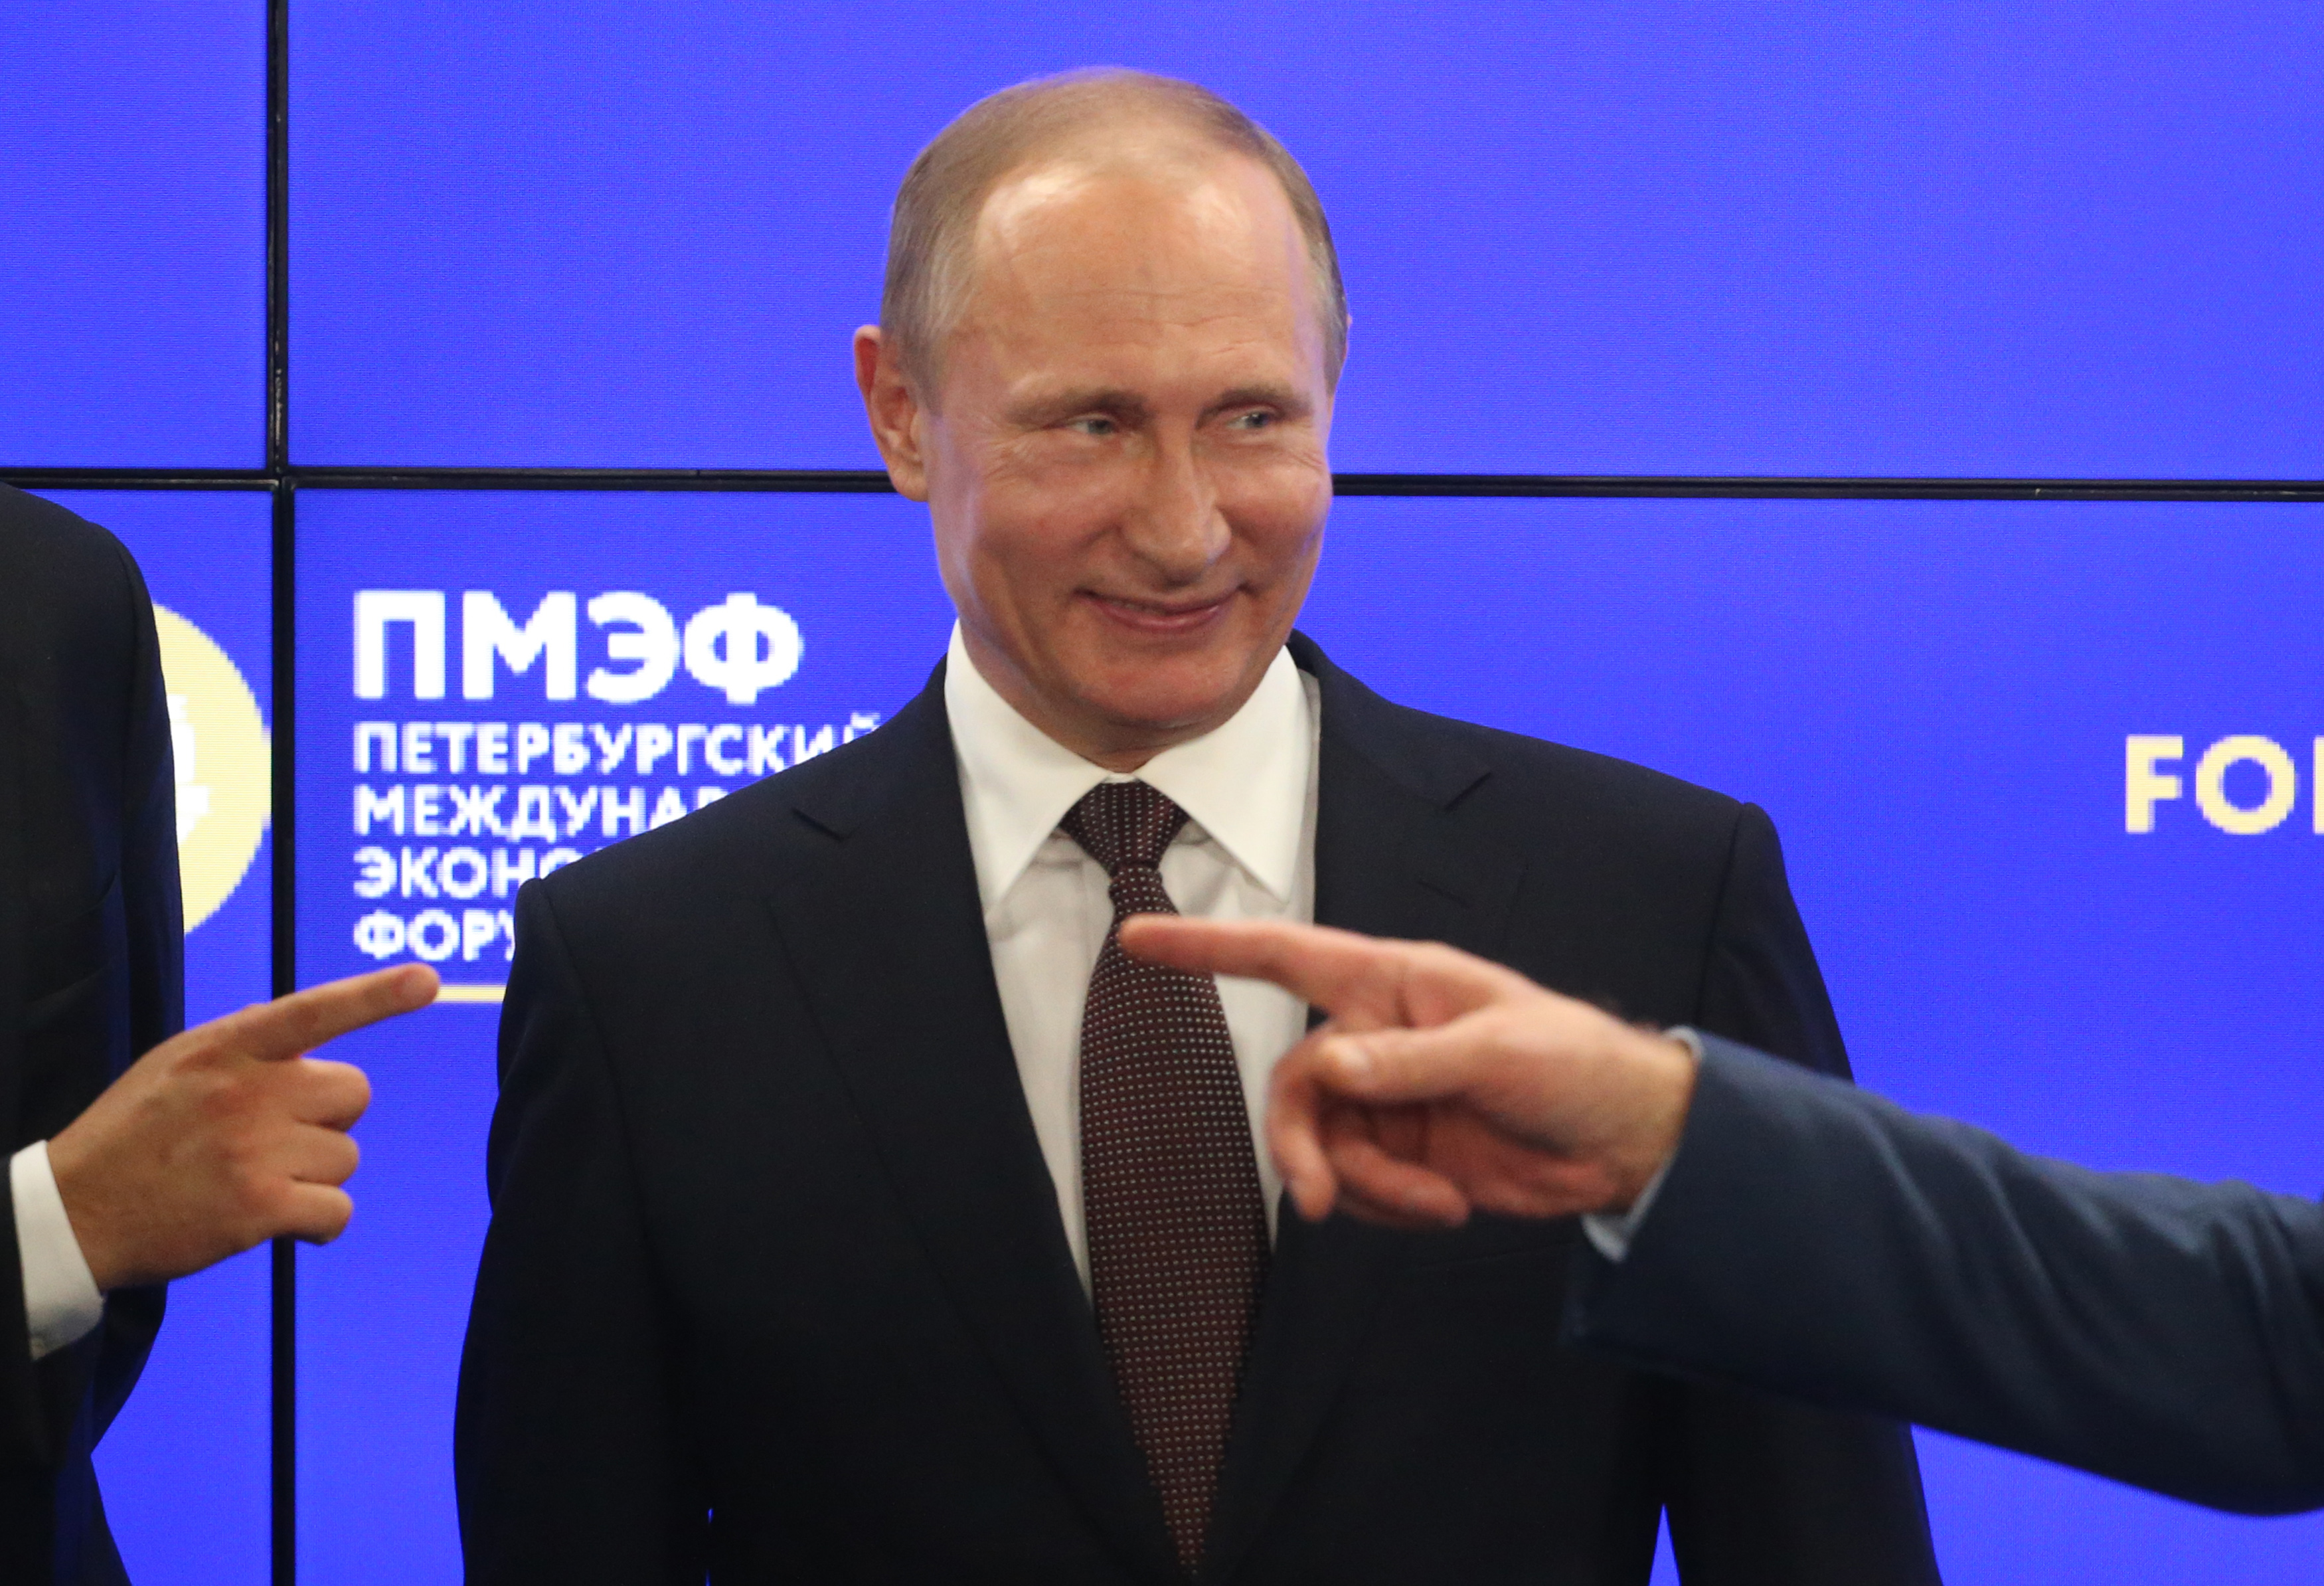 Russian President Vladimir Putin Attends Saint Petersburg International Economic Forum